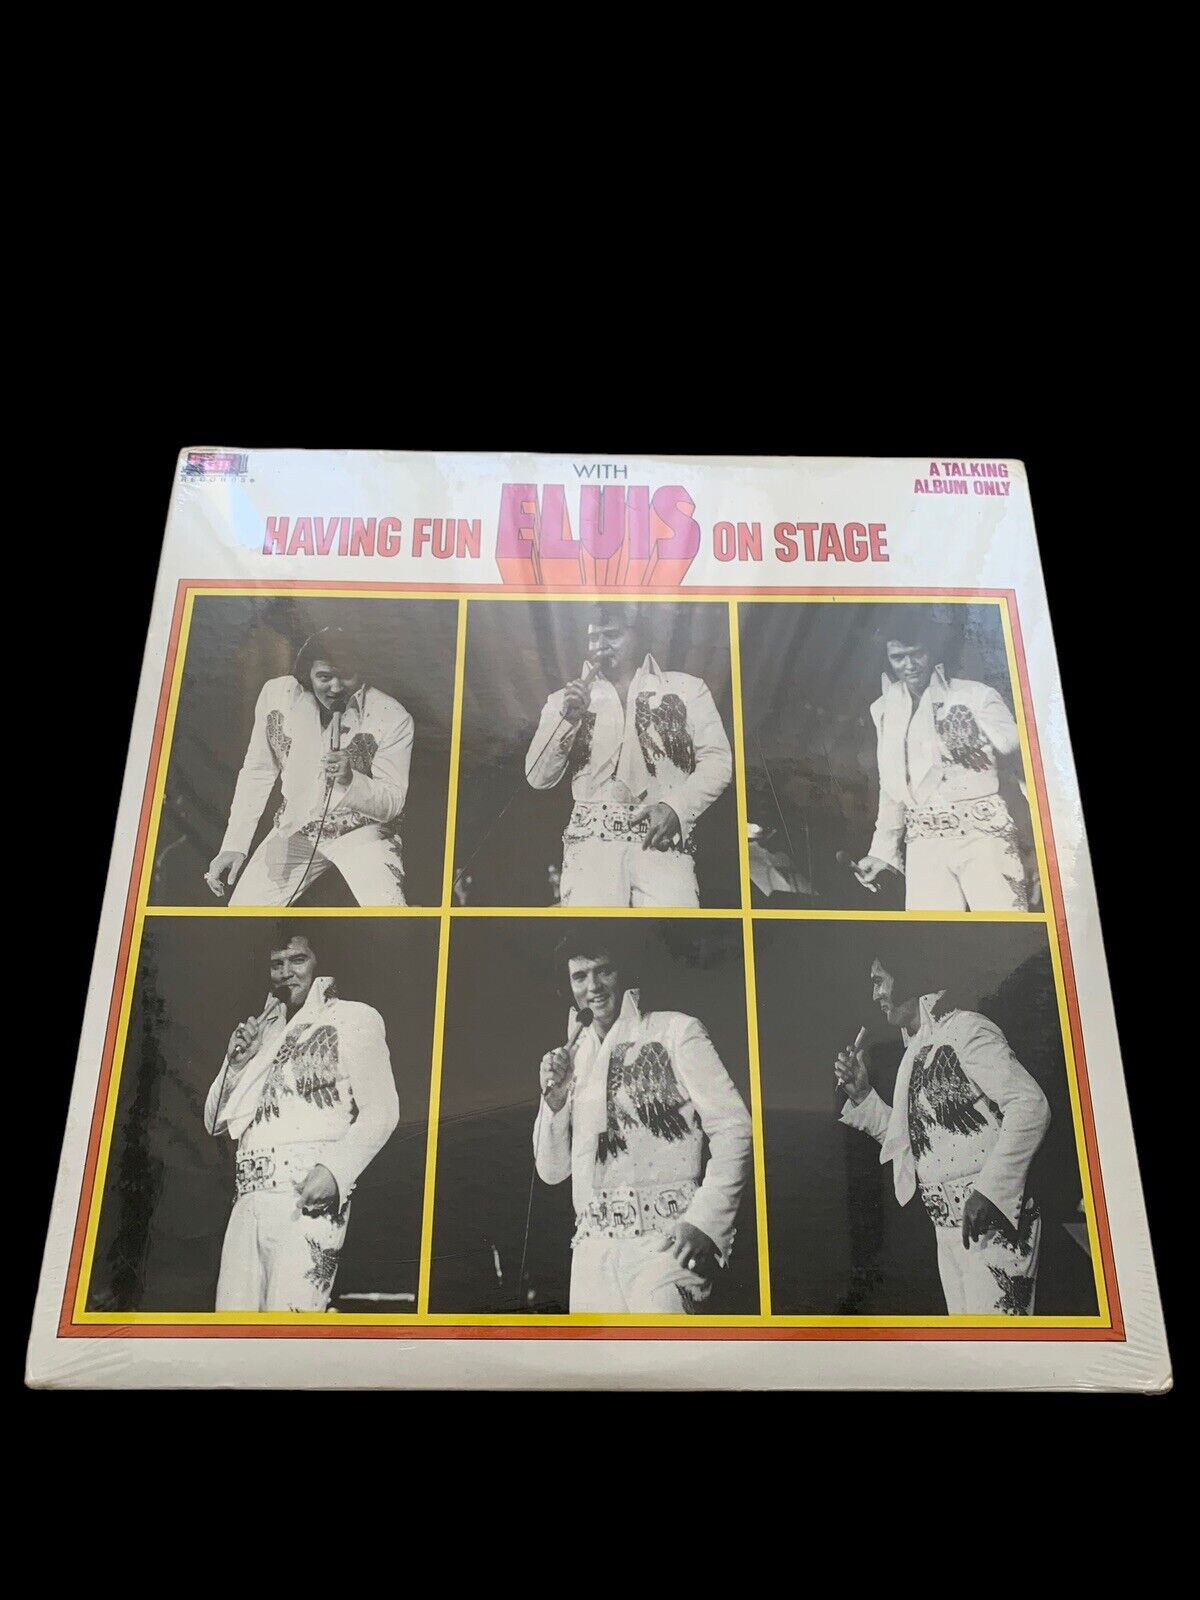 SEALED, Elvis Presley ‎– Having Fun With Elvis On Stage, 1st pressing, US, 1974